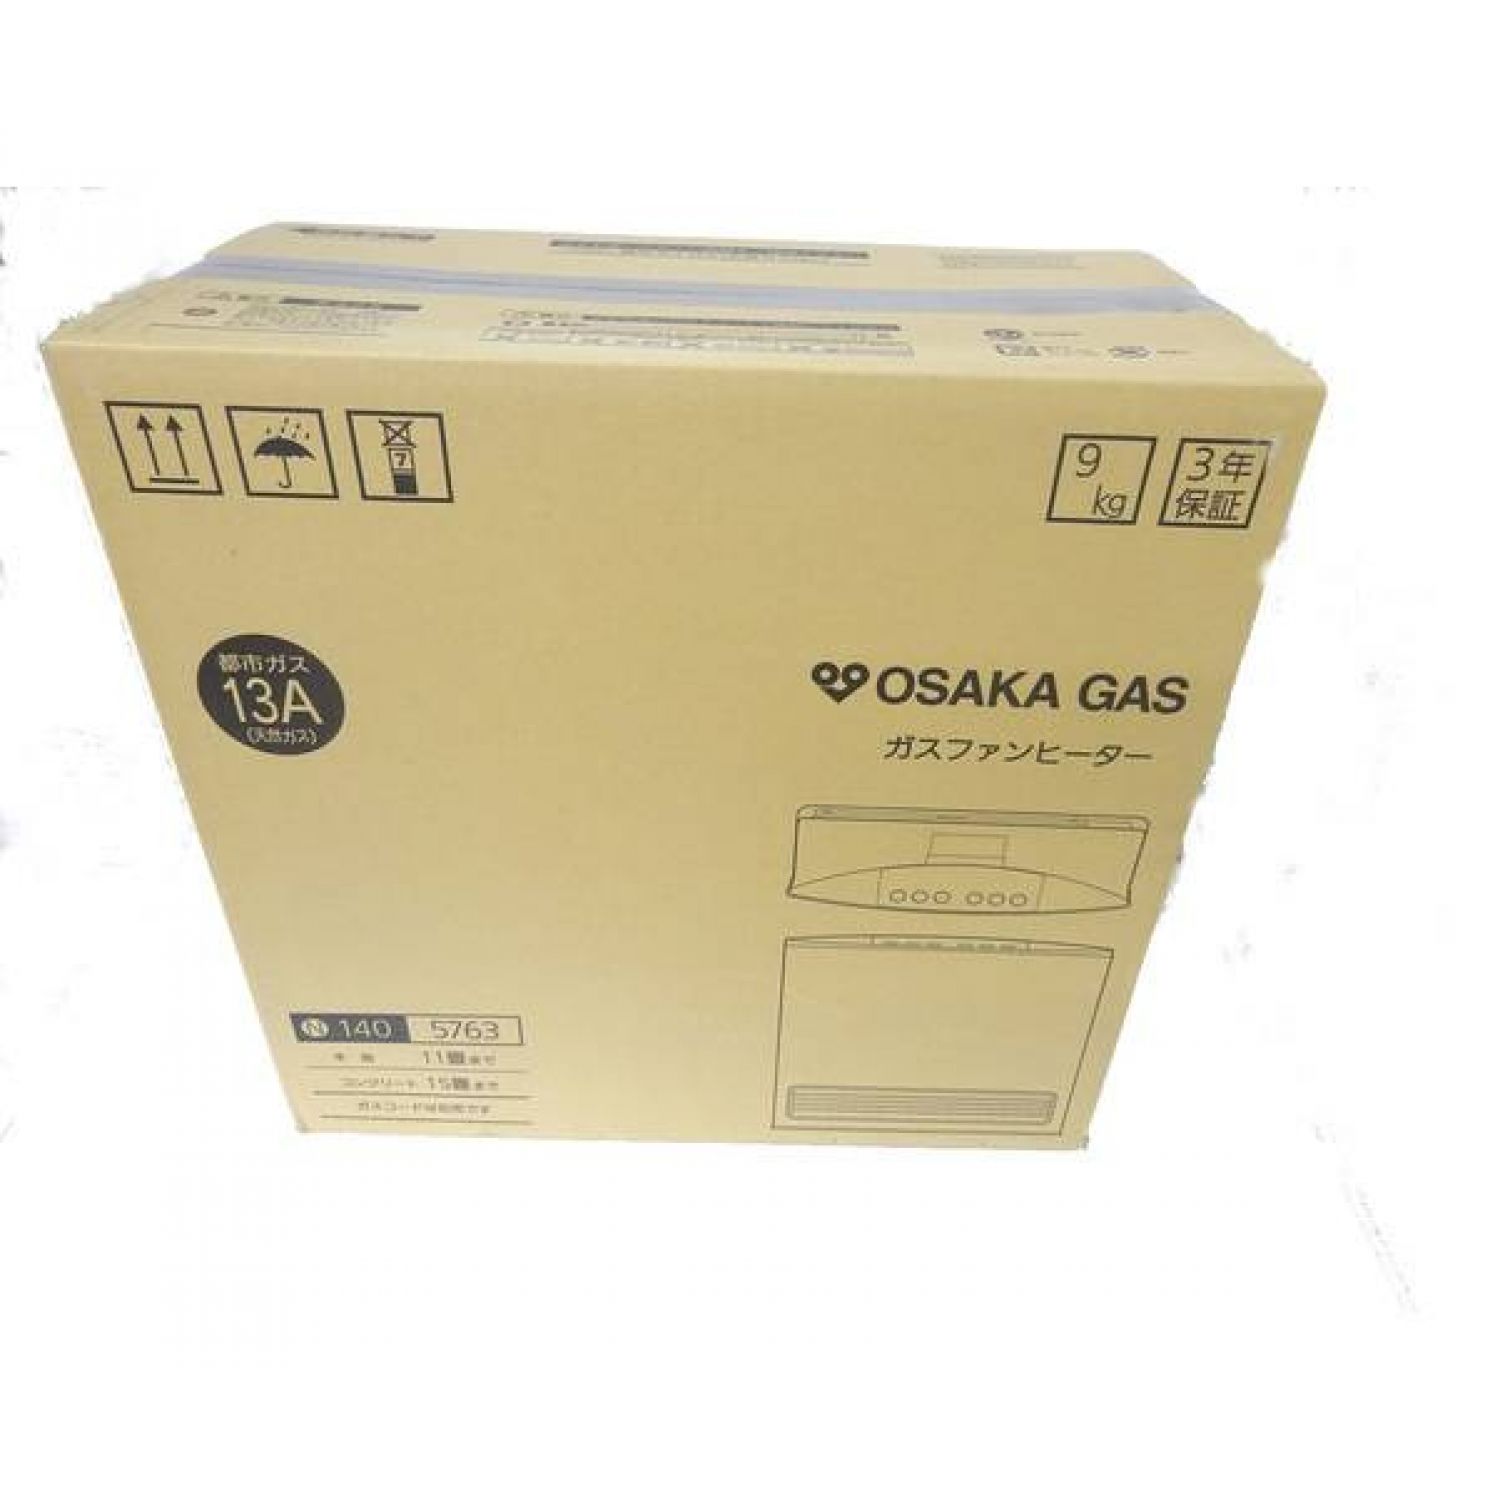 OOSAKA GAS 都市ガスファンヒーター 未使用品 140-5763 11-15畳用 程度